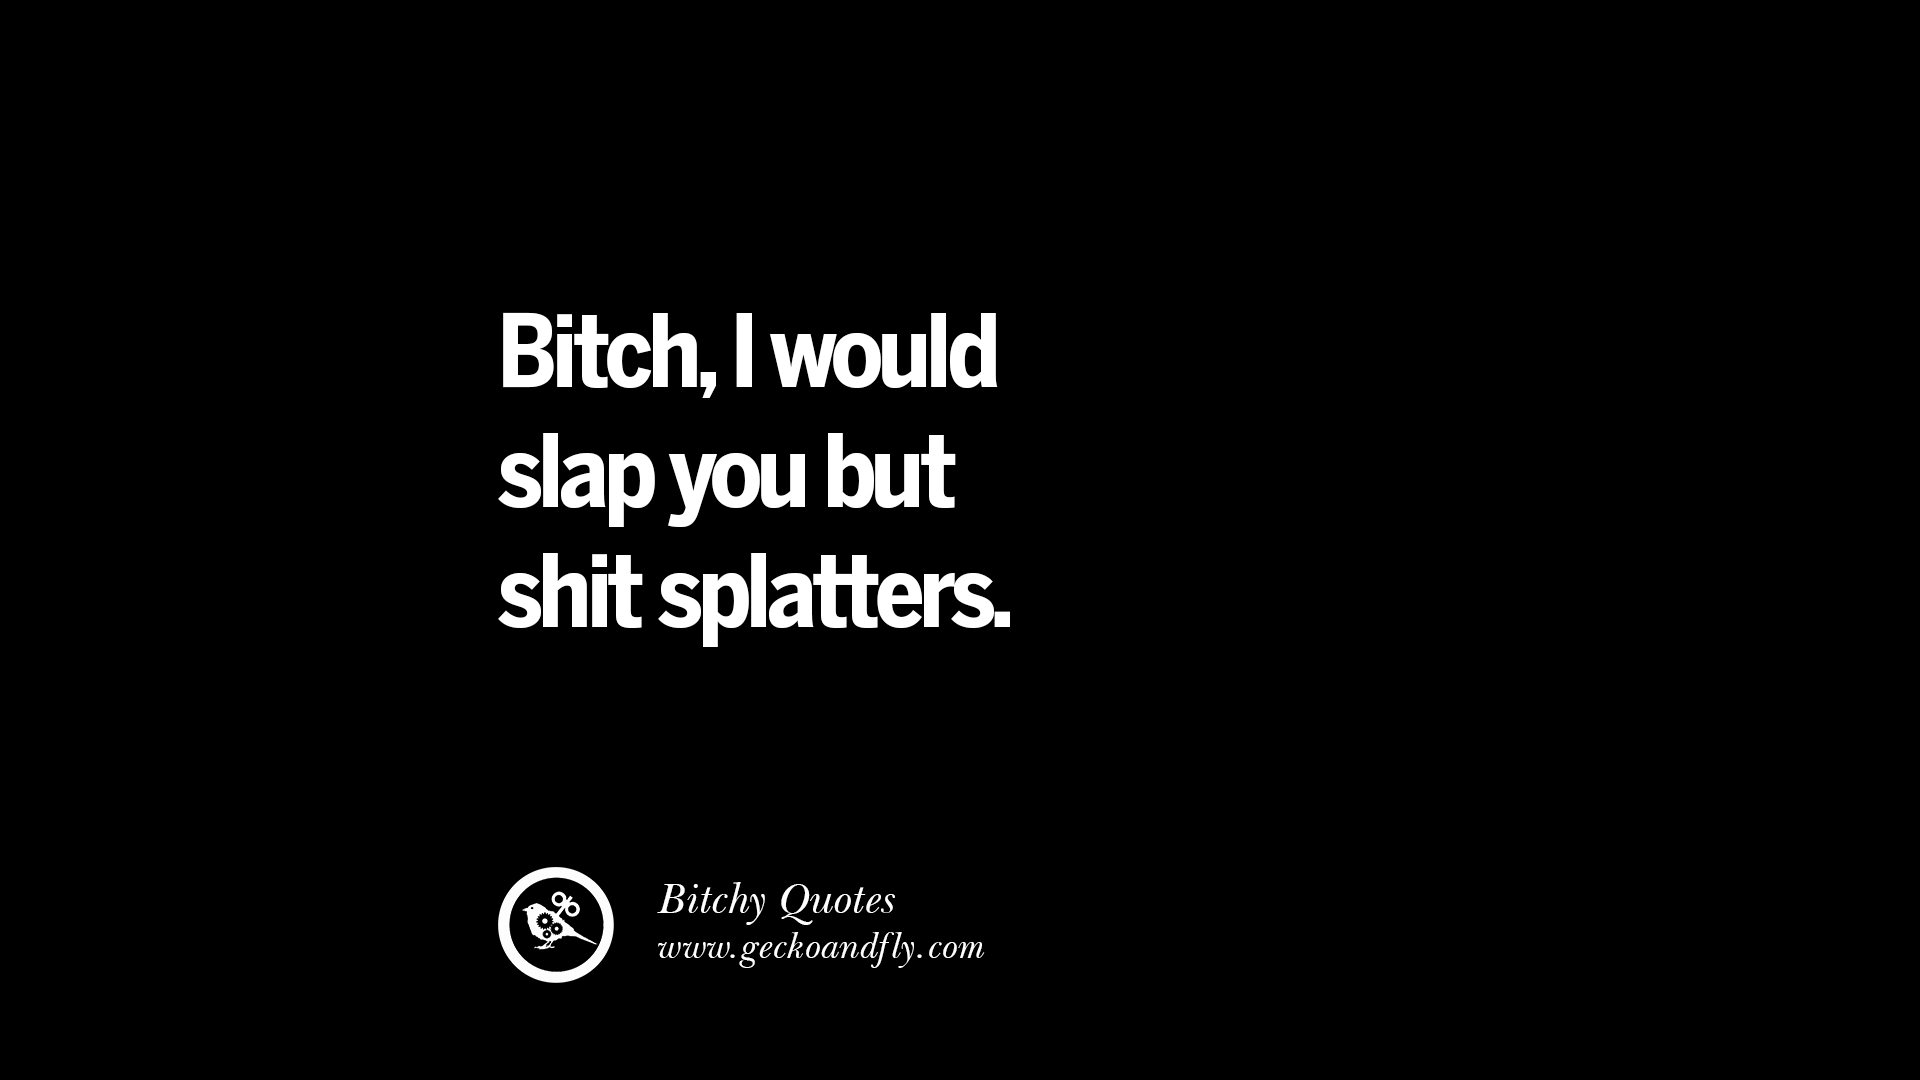 Bitch I would slap you but shit splatters best tumblr instagram pinterest inspiring meme